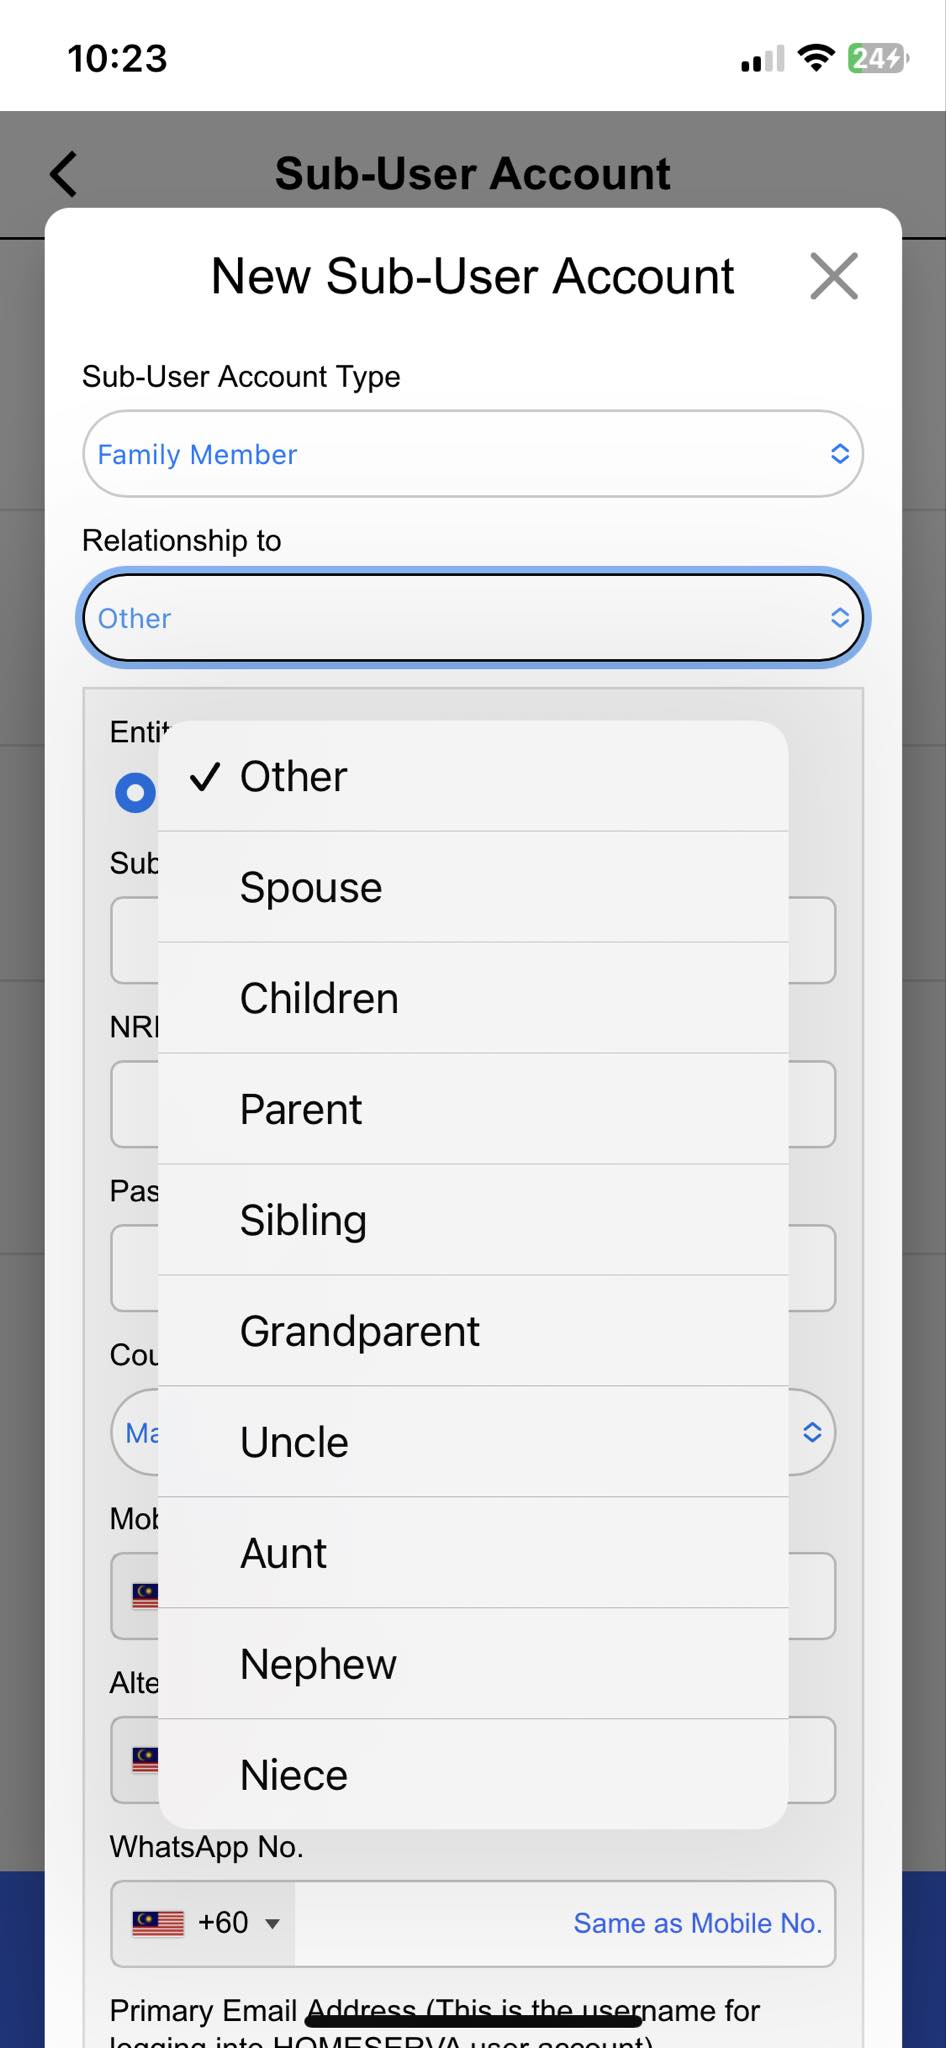 Sub-User Accounts App Screenshot - Select Relationship to Applicant